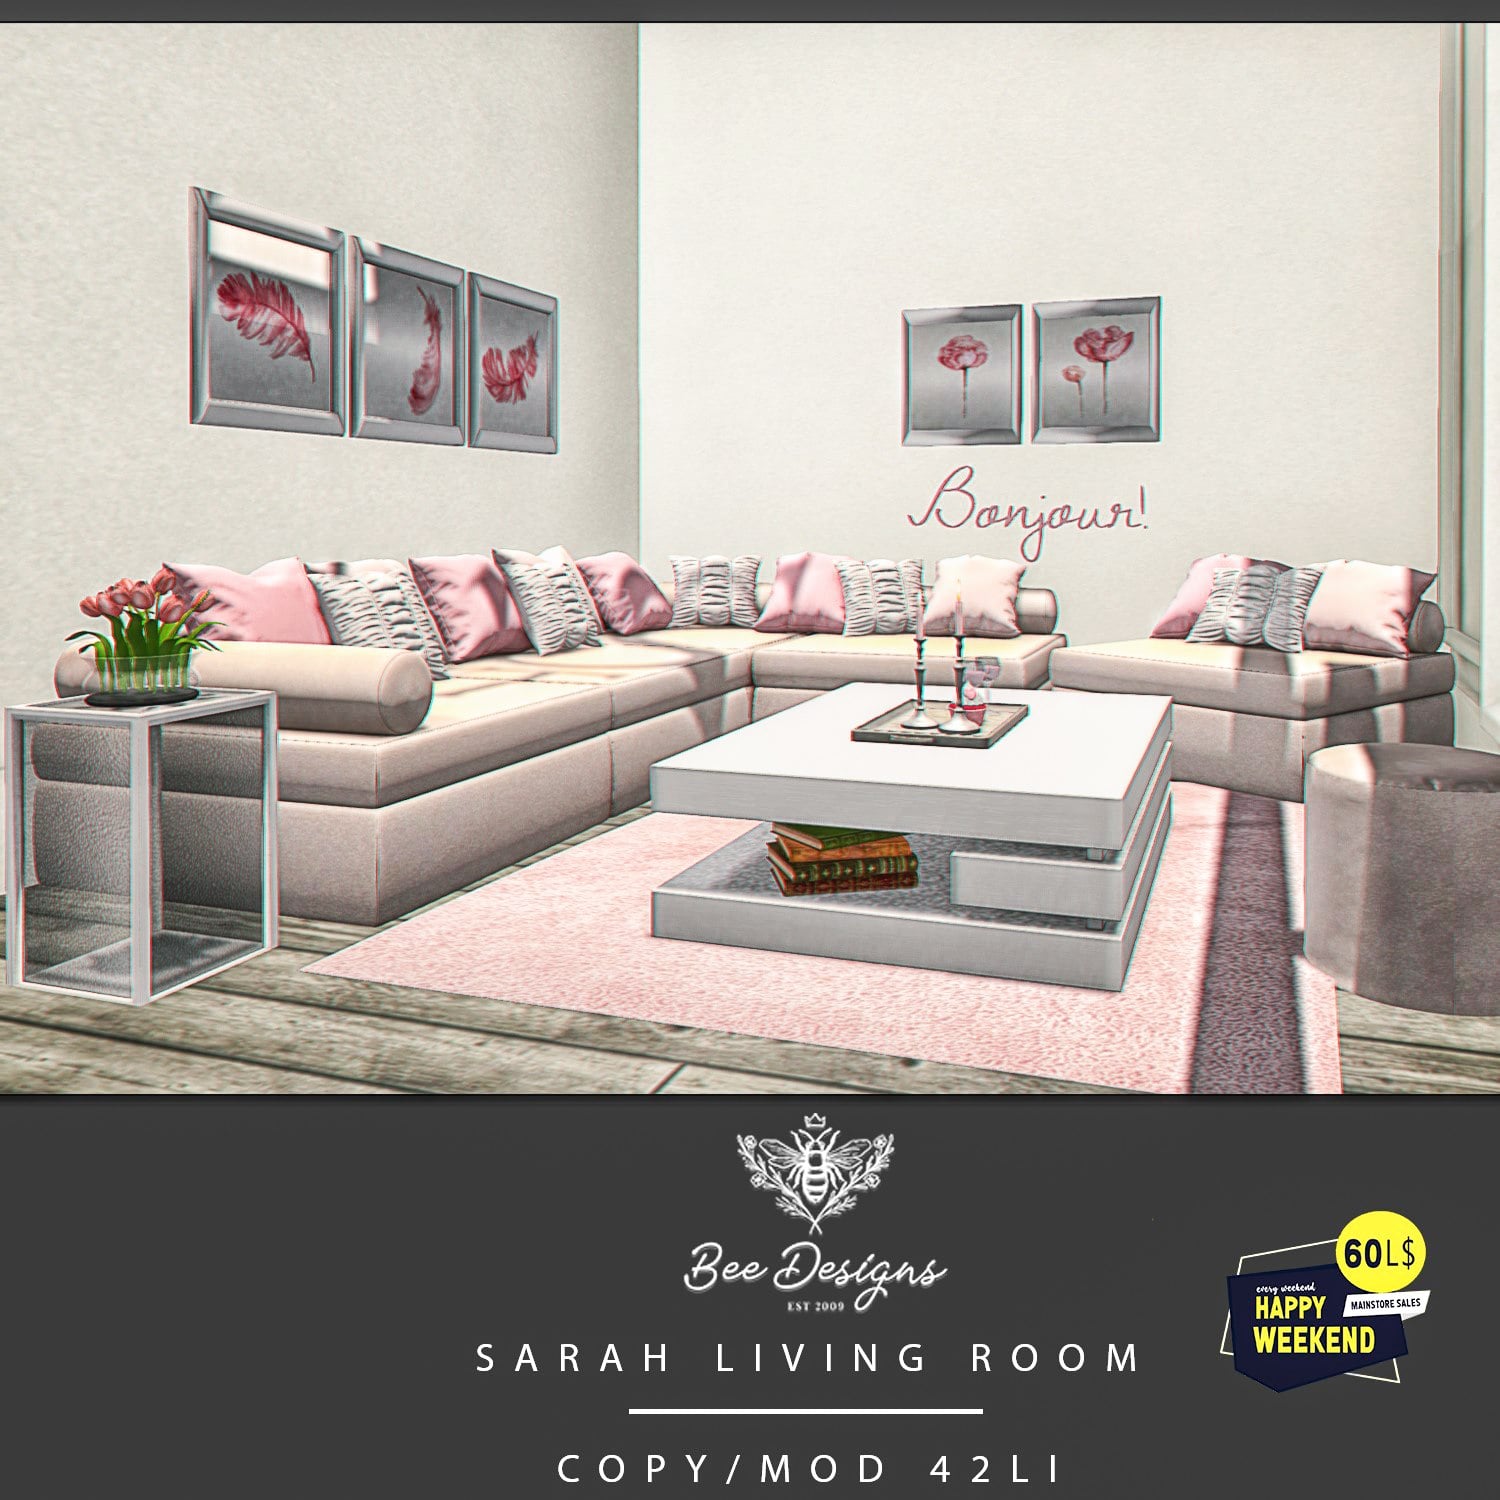 Bee Designs – Sarah Living Room